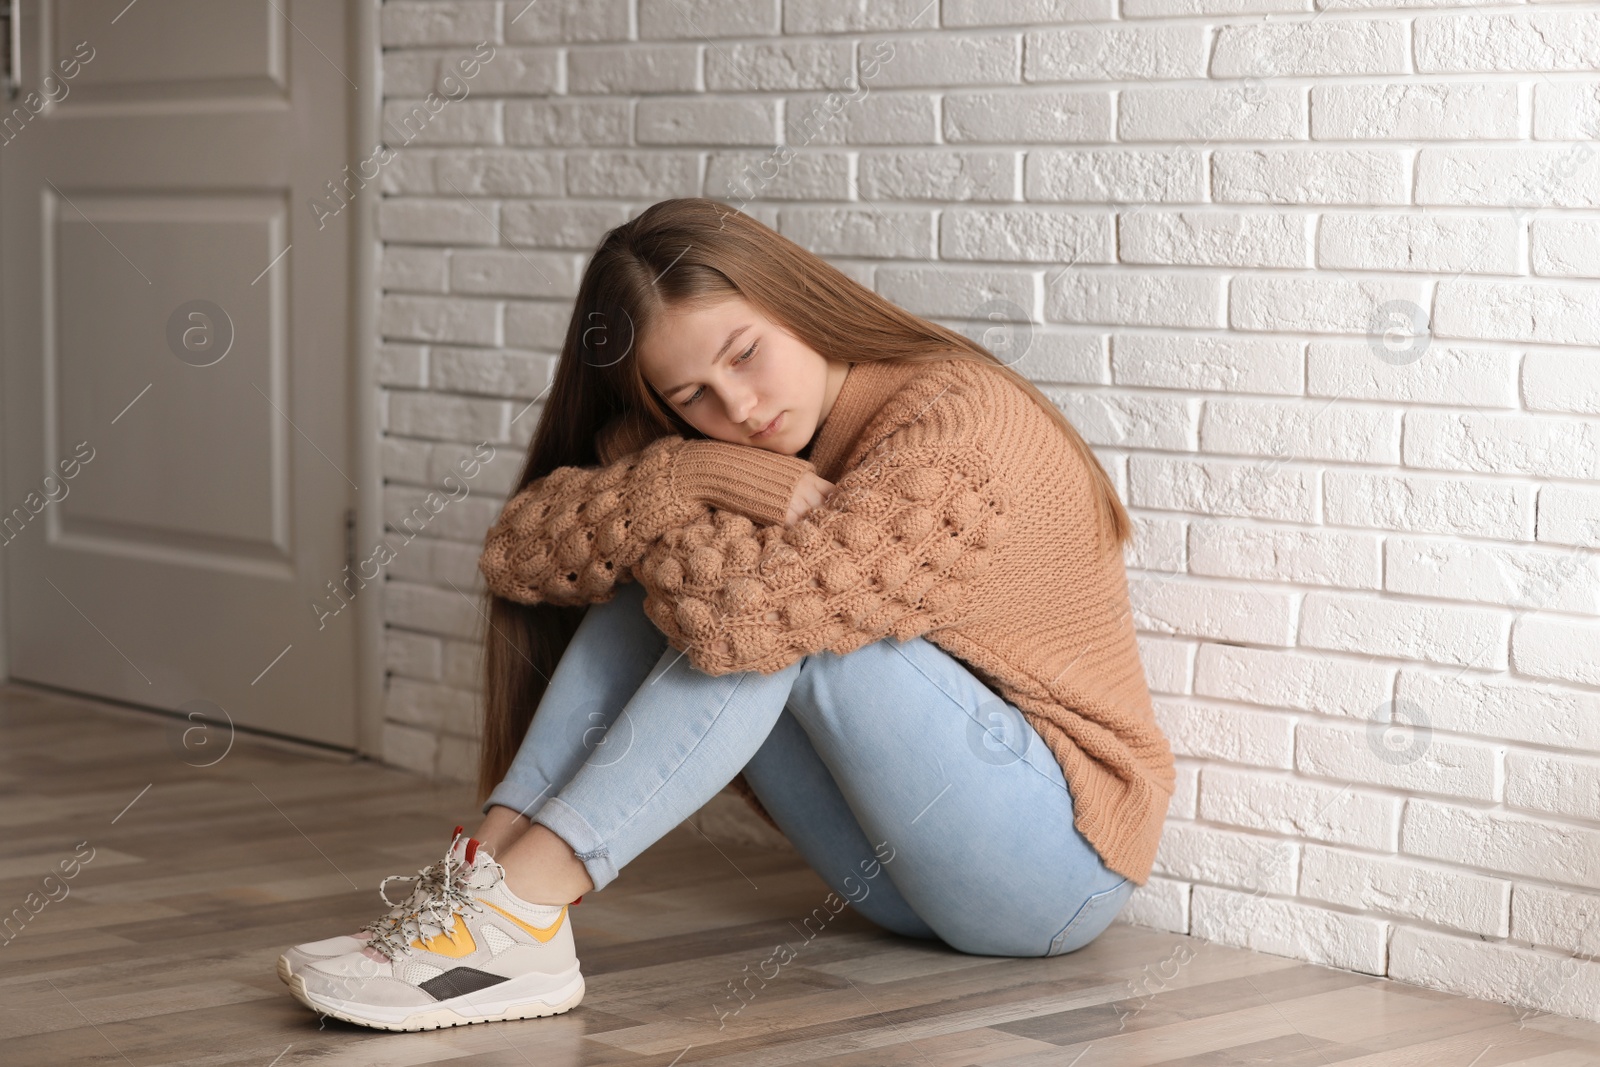 Photo of Upset teenage girl sitting alone on floor near wall